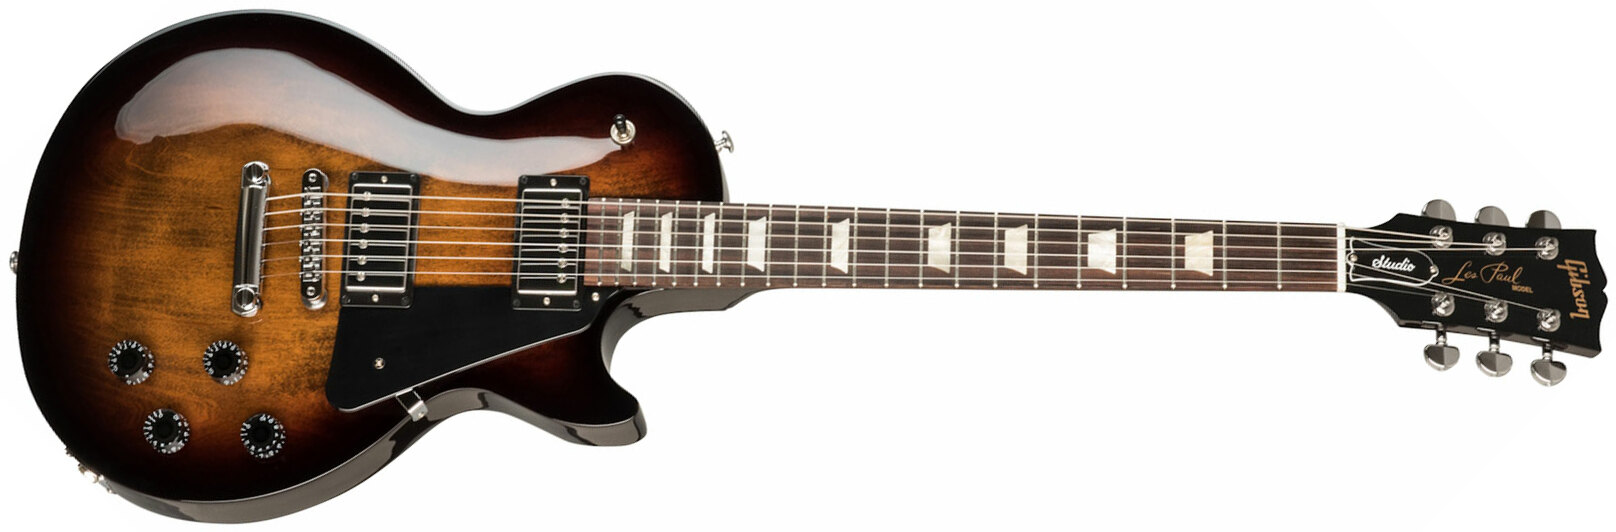 Gibson Les Paul Studio Modern 2h Ht Rw - Smokehouse Burst - Single cut electric guitar - Main picture